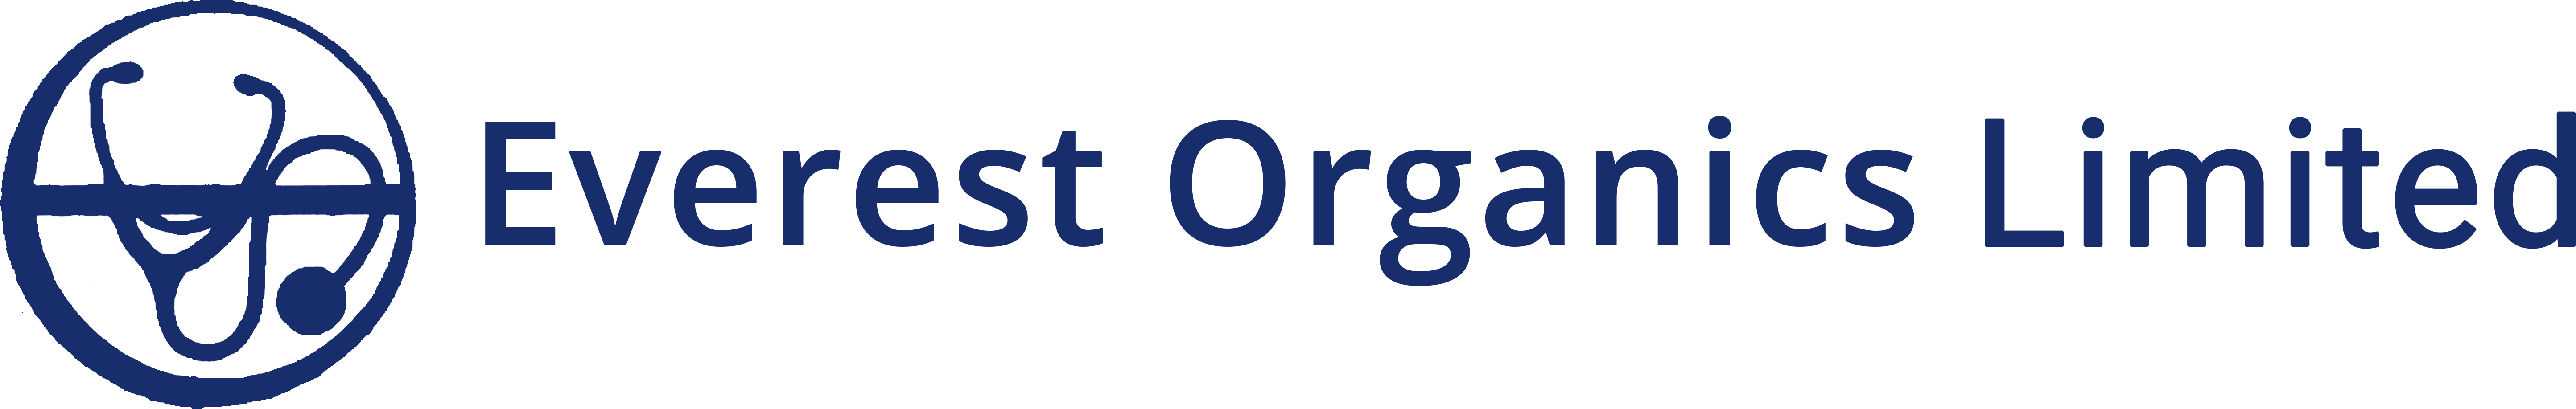 Everest Organics logo